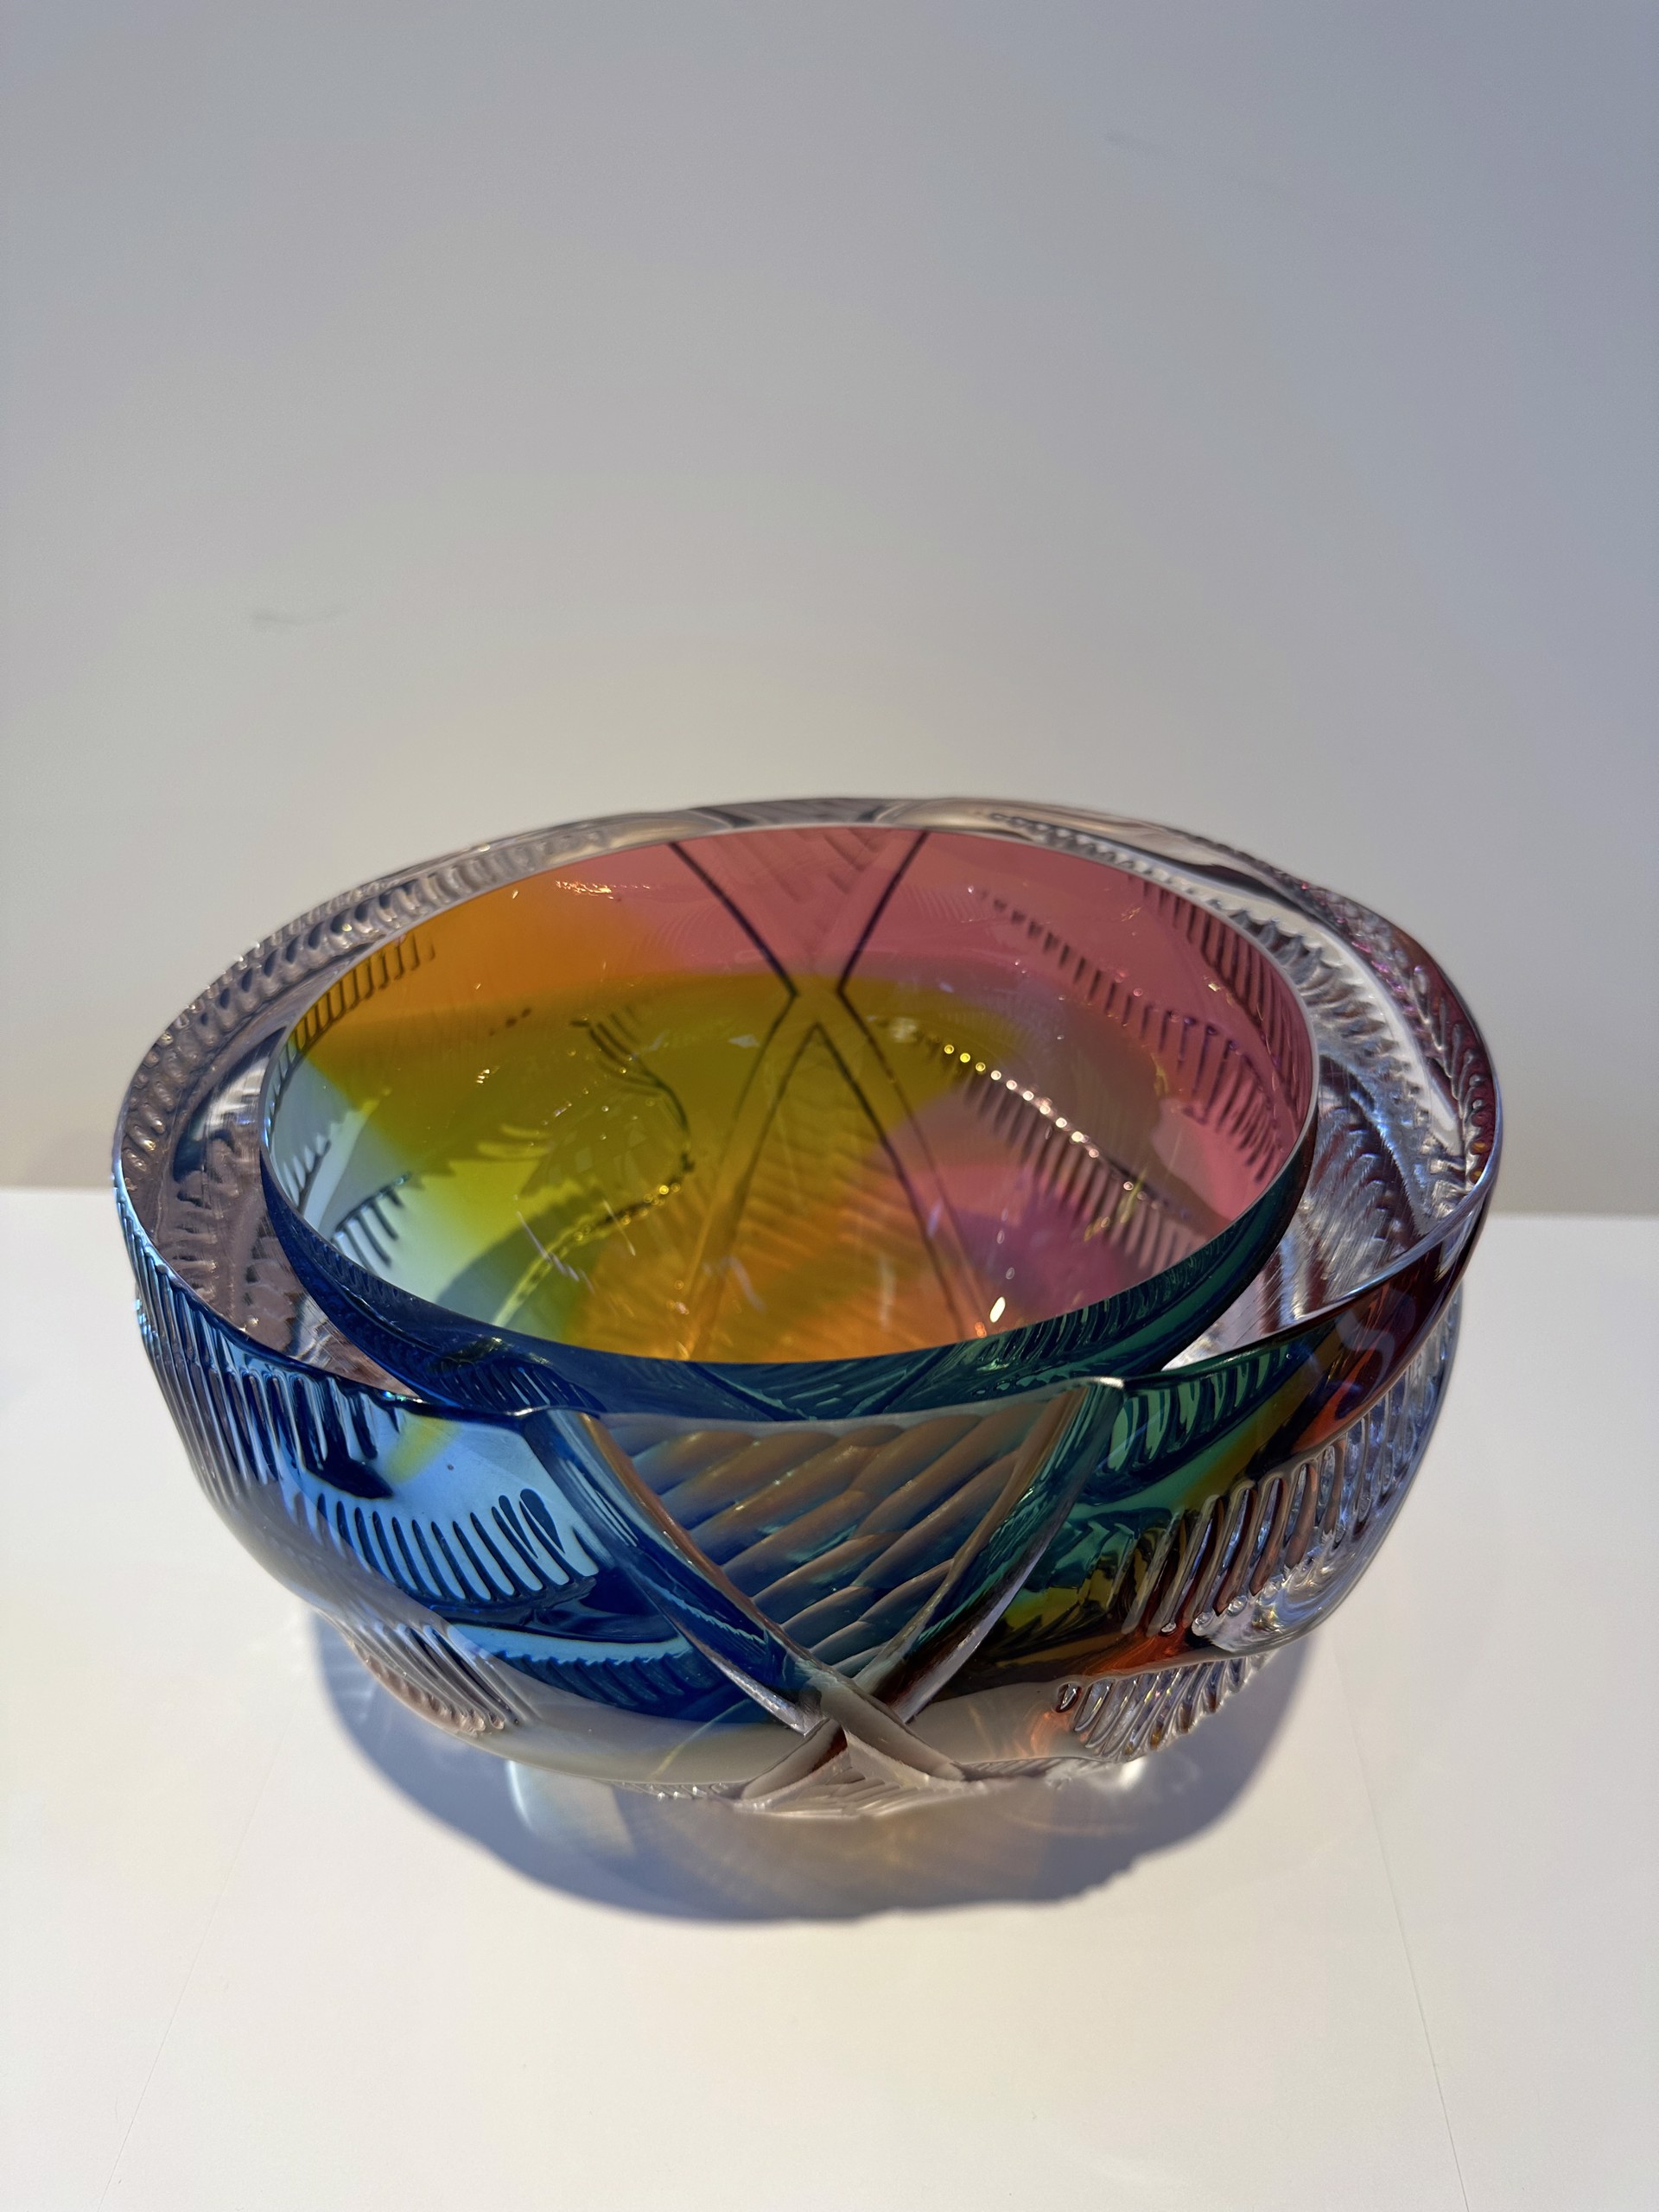 Rainbow's Drum (Texture Bowl) by Leon Applebaum